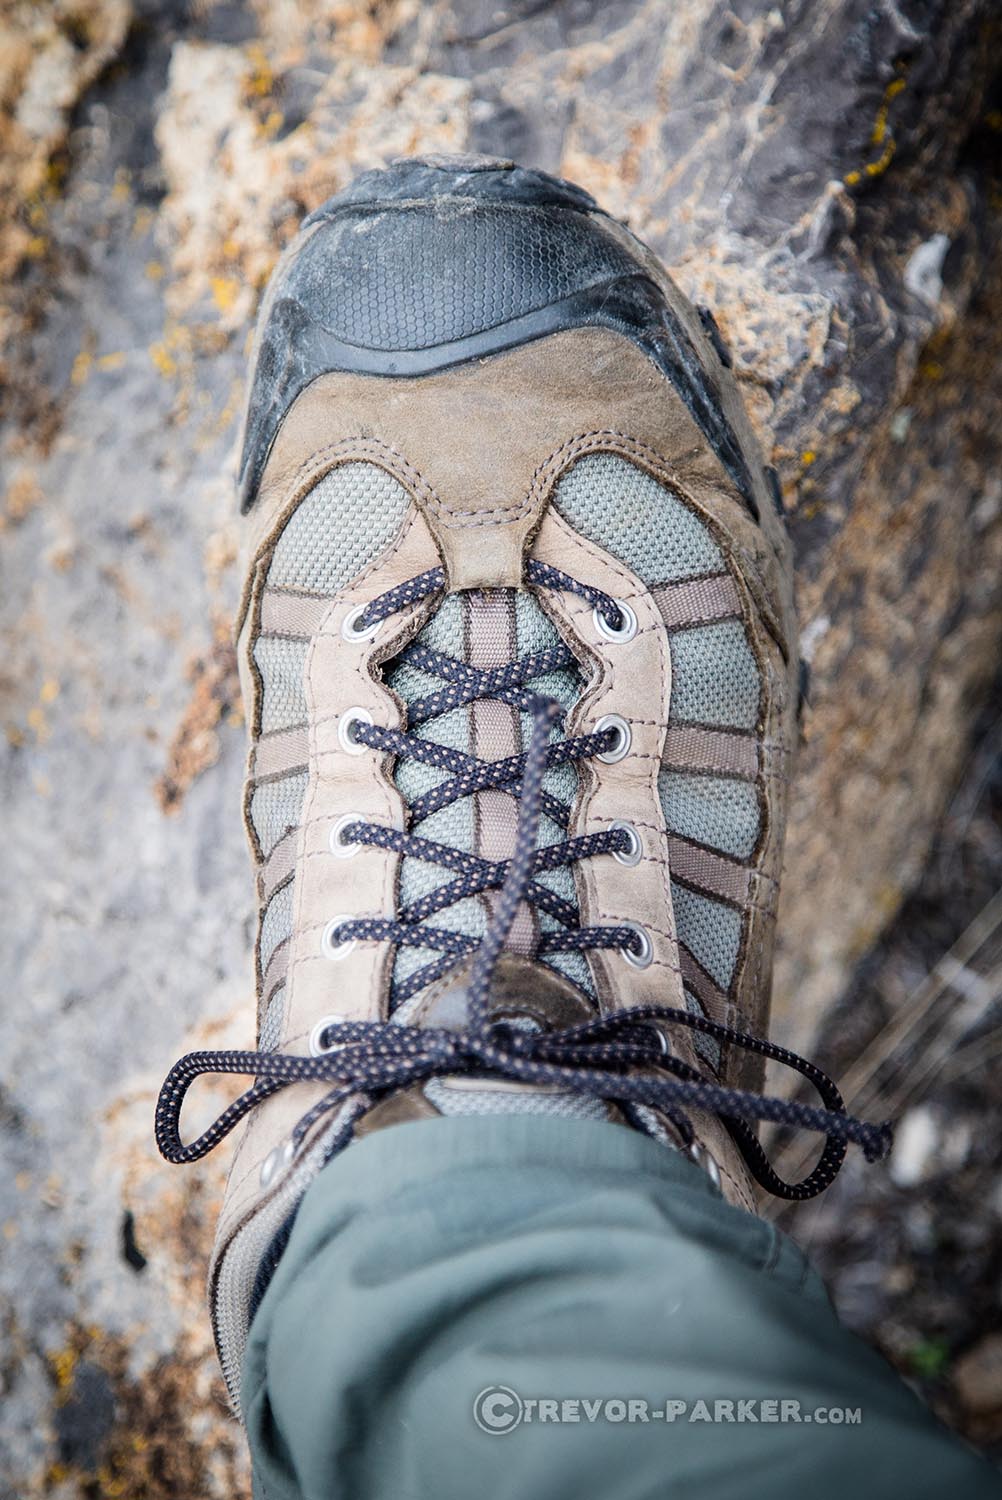 oboz men's tamarack bdry hiking shoe